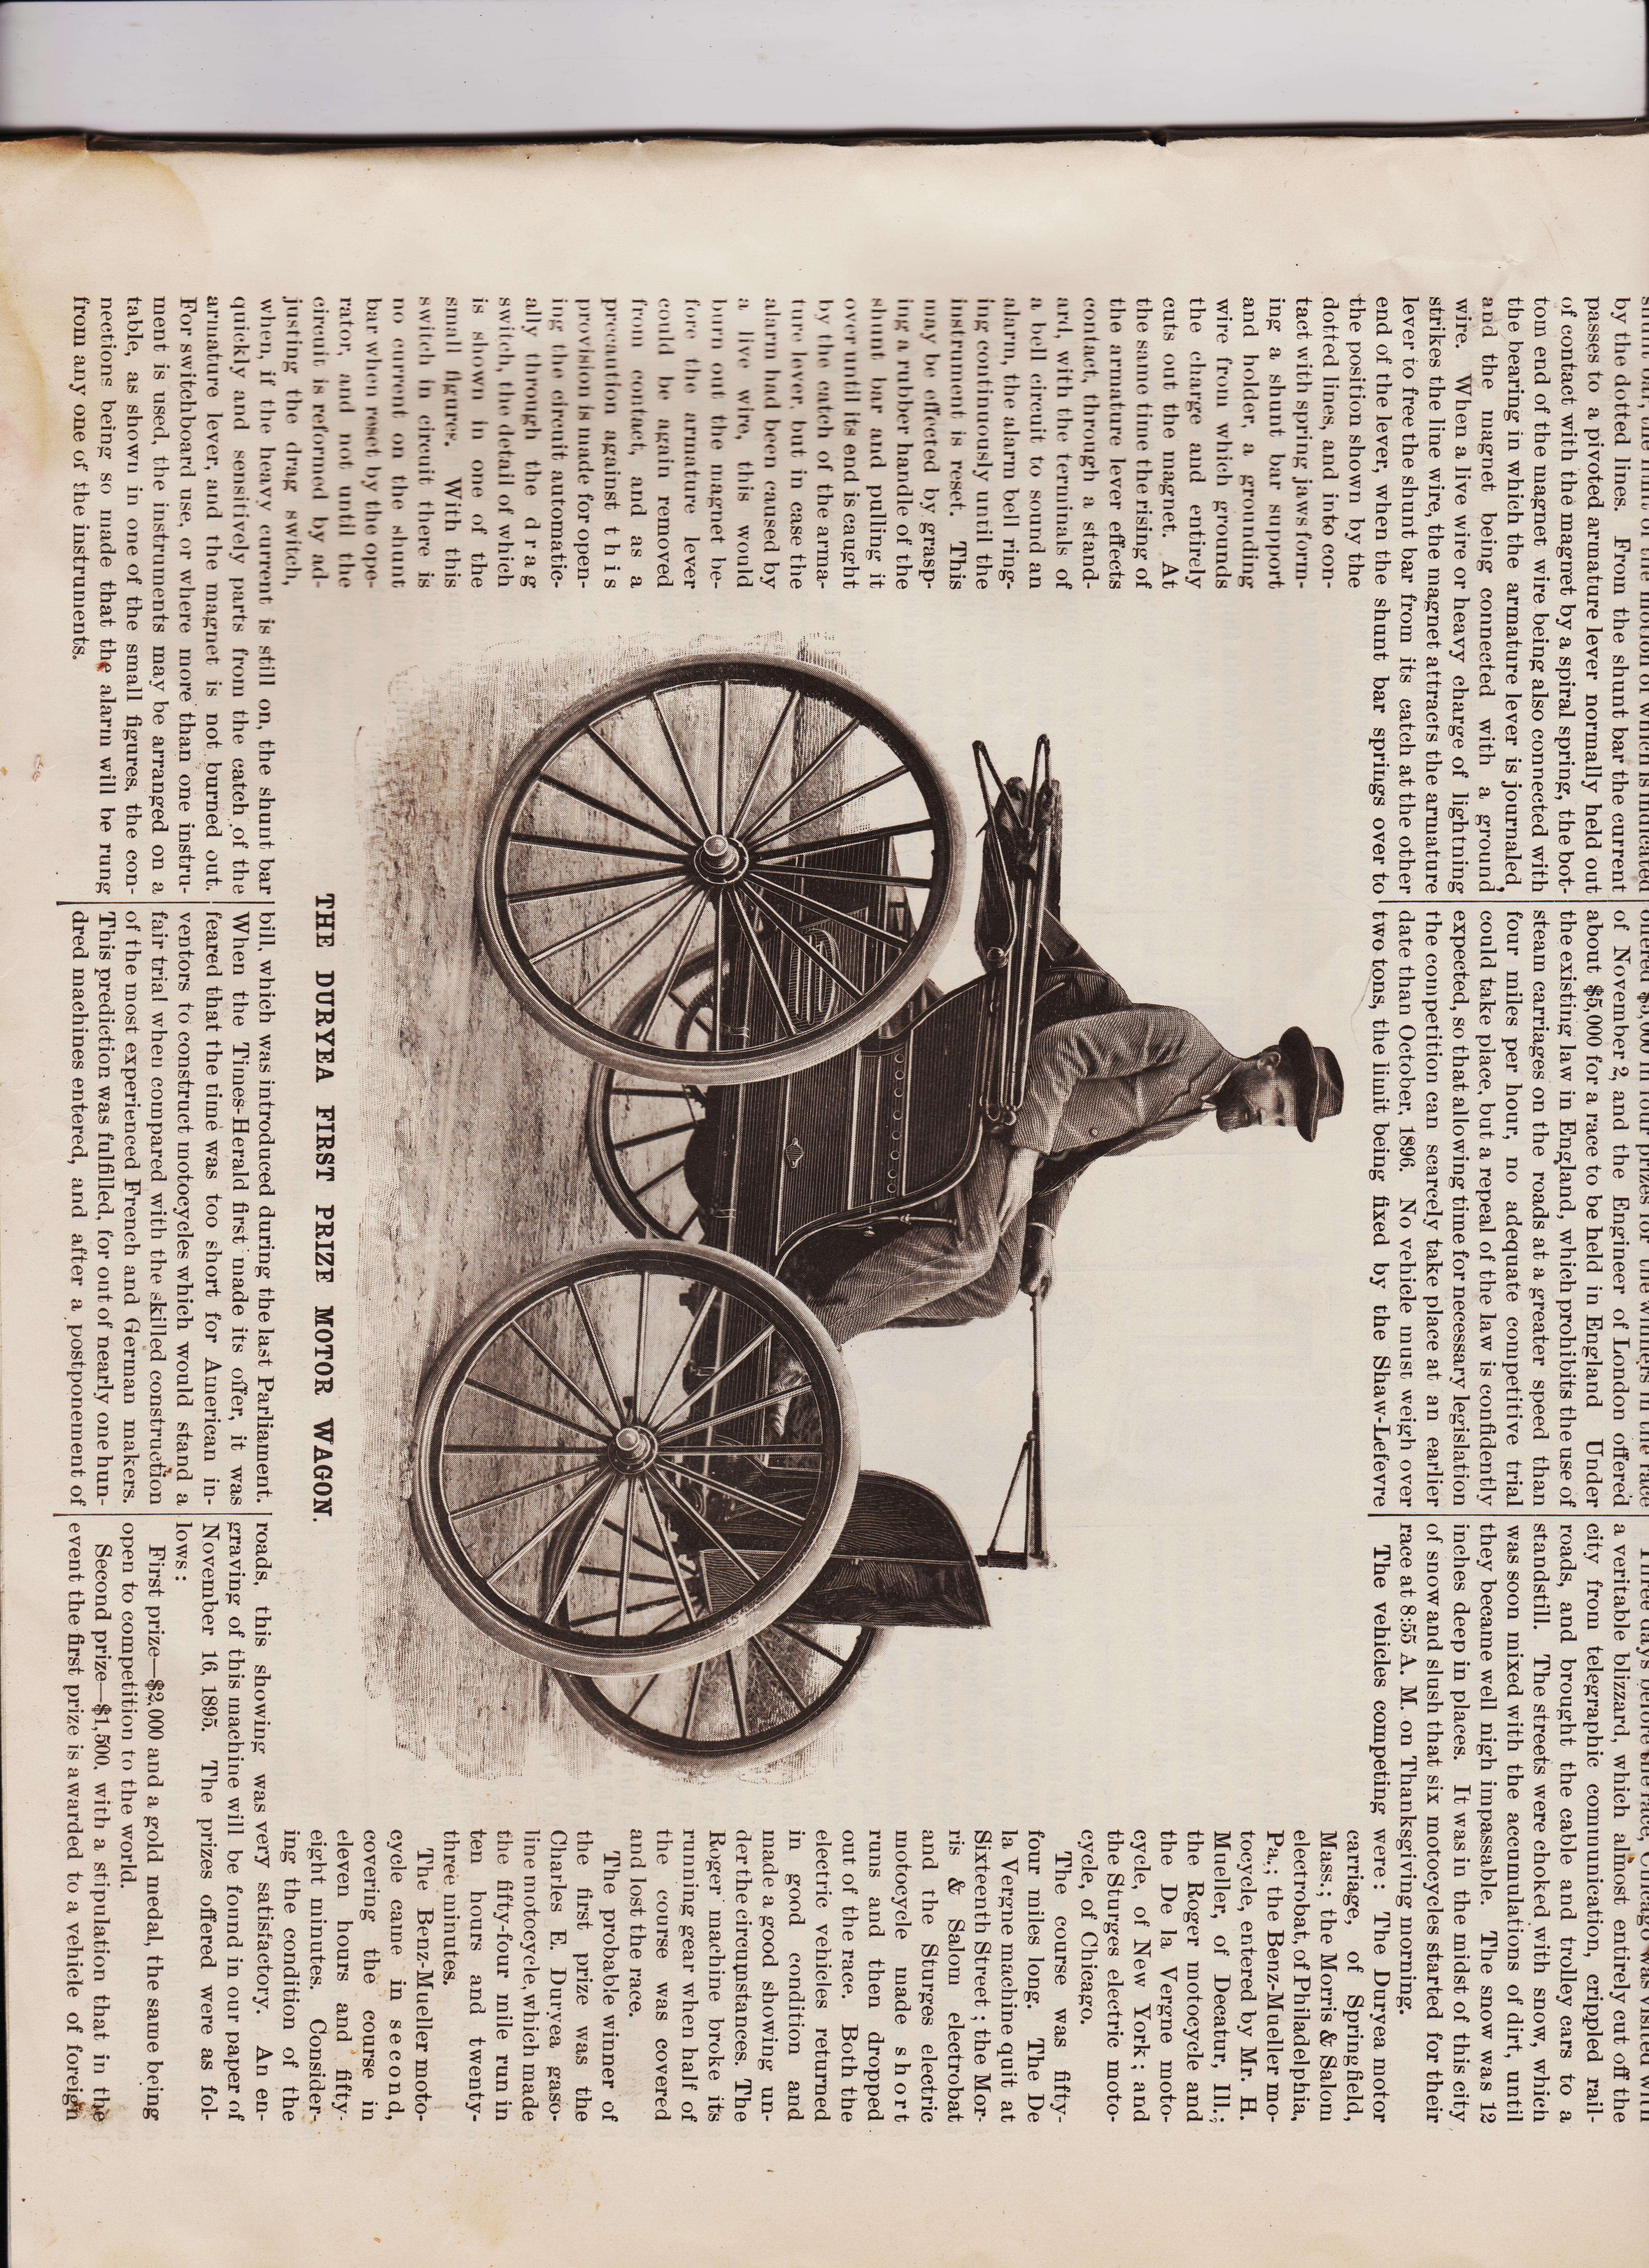 https://antiquemachinery.com/images-scientific-american/Scientific-American-Dec-7-1895-pg357-bot-Chicago-Automobile-Race-Durea-first-place-wagon-automobile-carrage-motomobile-Wins-Hutchison-Current-Arestor.jpeg.jpeg